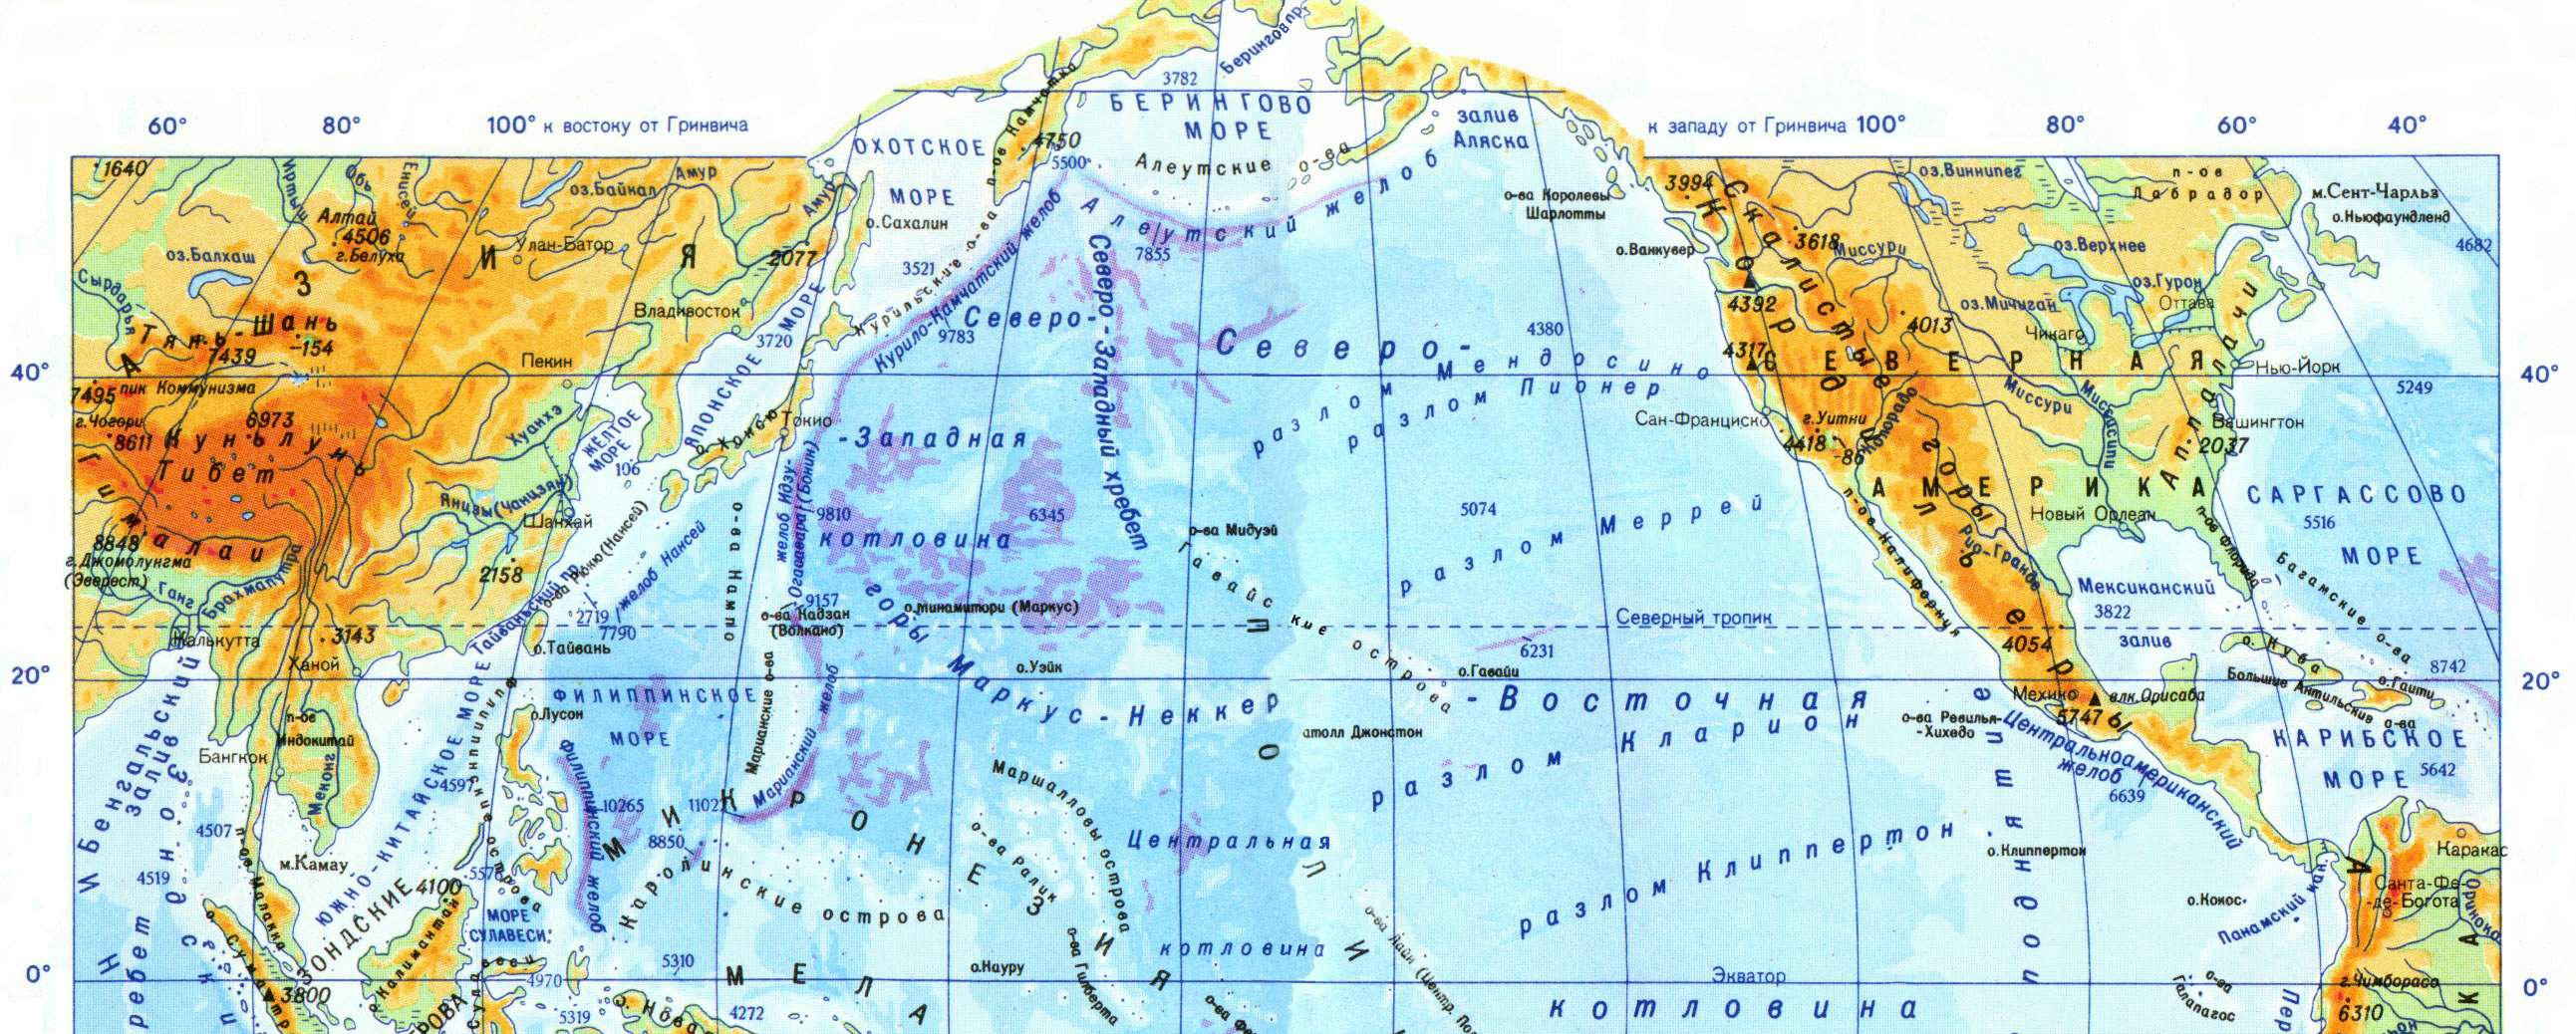 Полуострова и заливы евразии. Карта Азии с морями проливами и заливами. Заливы проливы моря моря Евразии. Моря заливы проливы зарубежной Азии. Моря океаны заливы проливы Евразии.